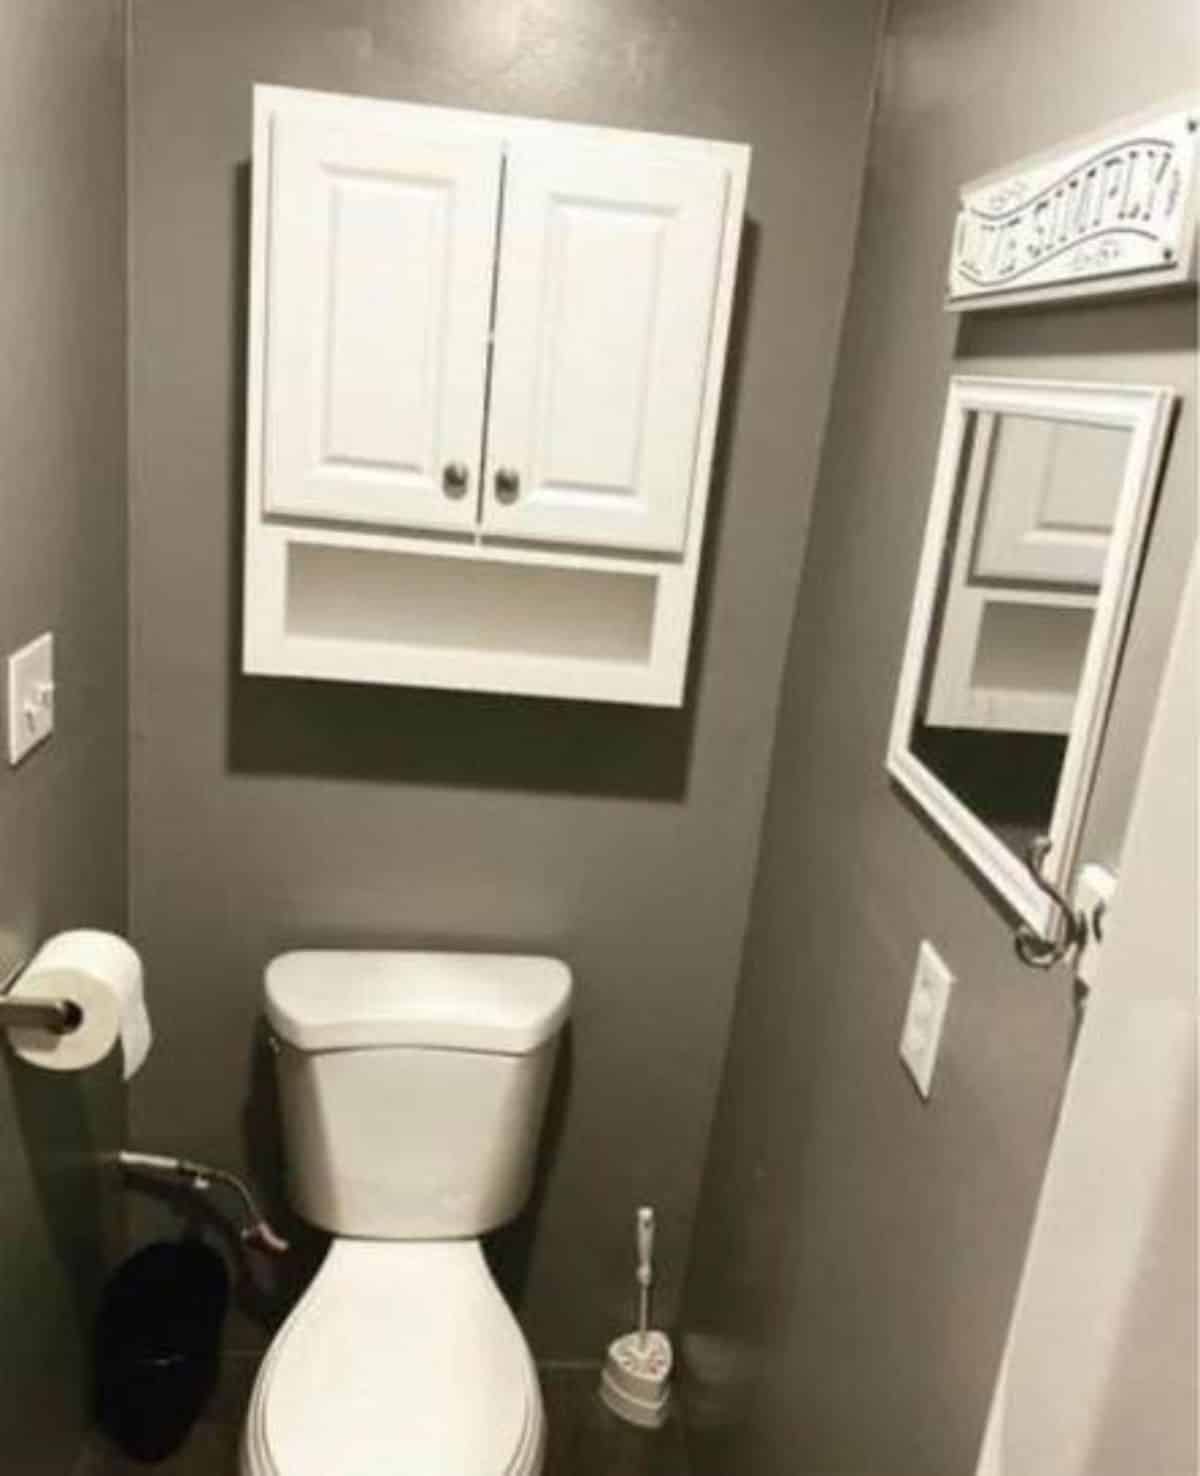 Standard toilet and storage in bathroom